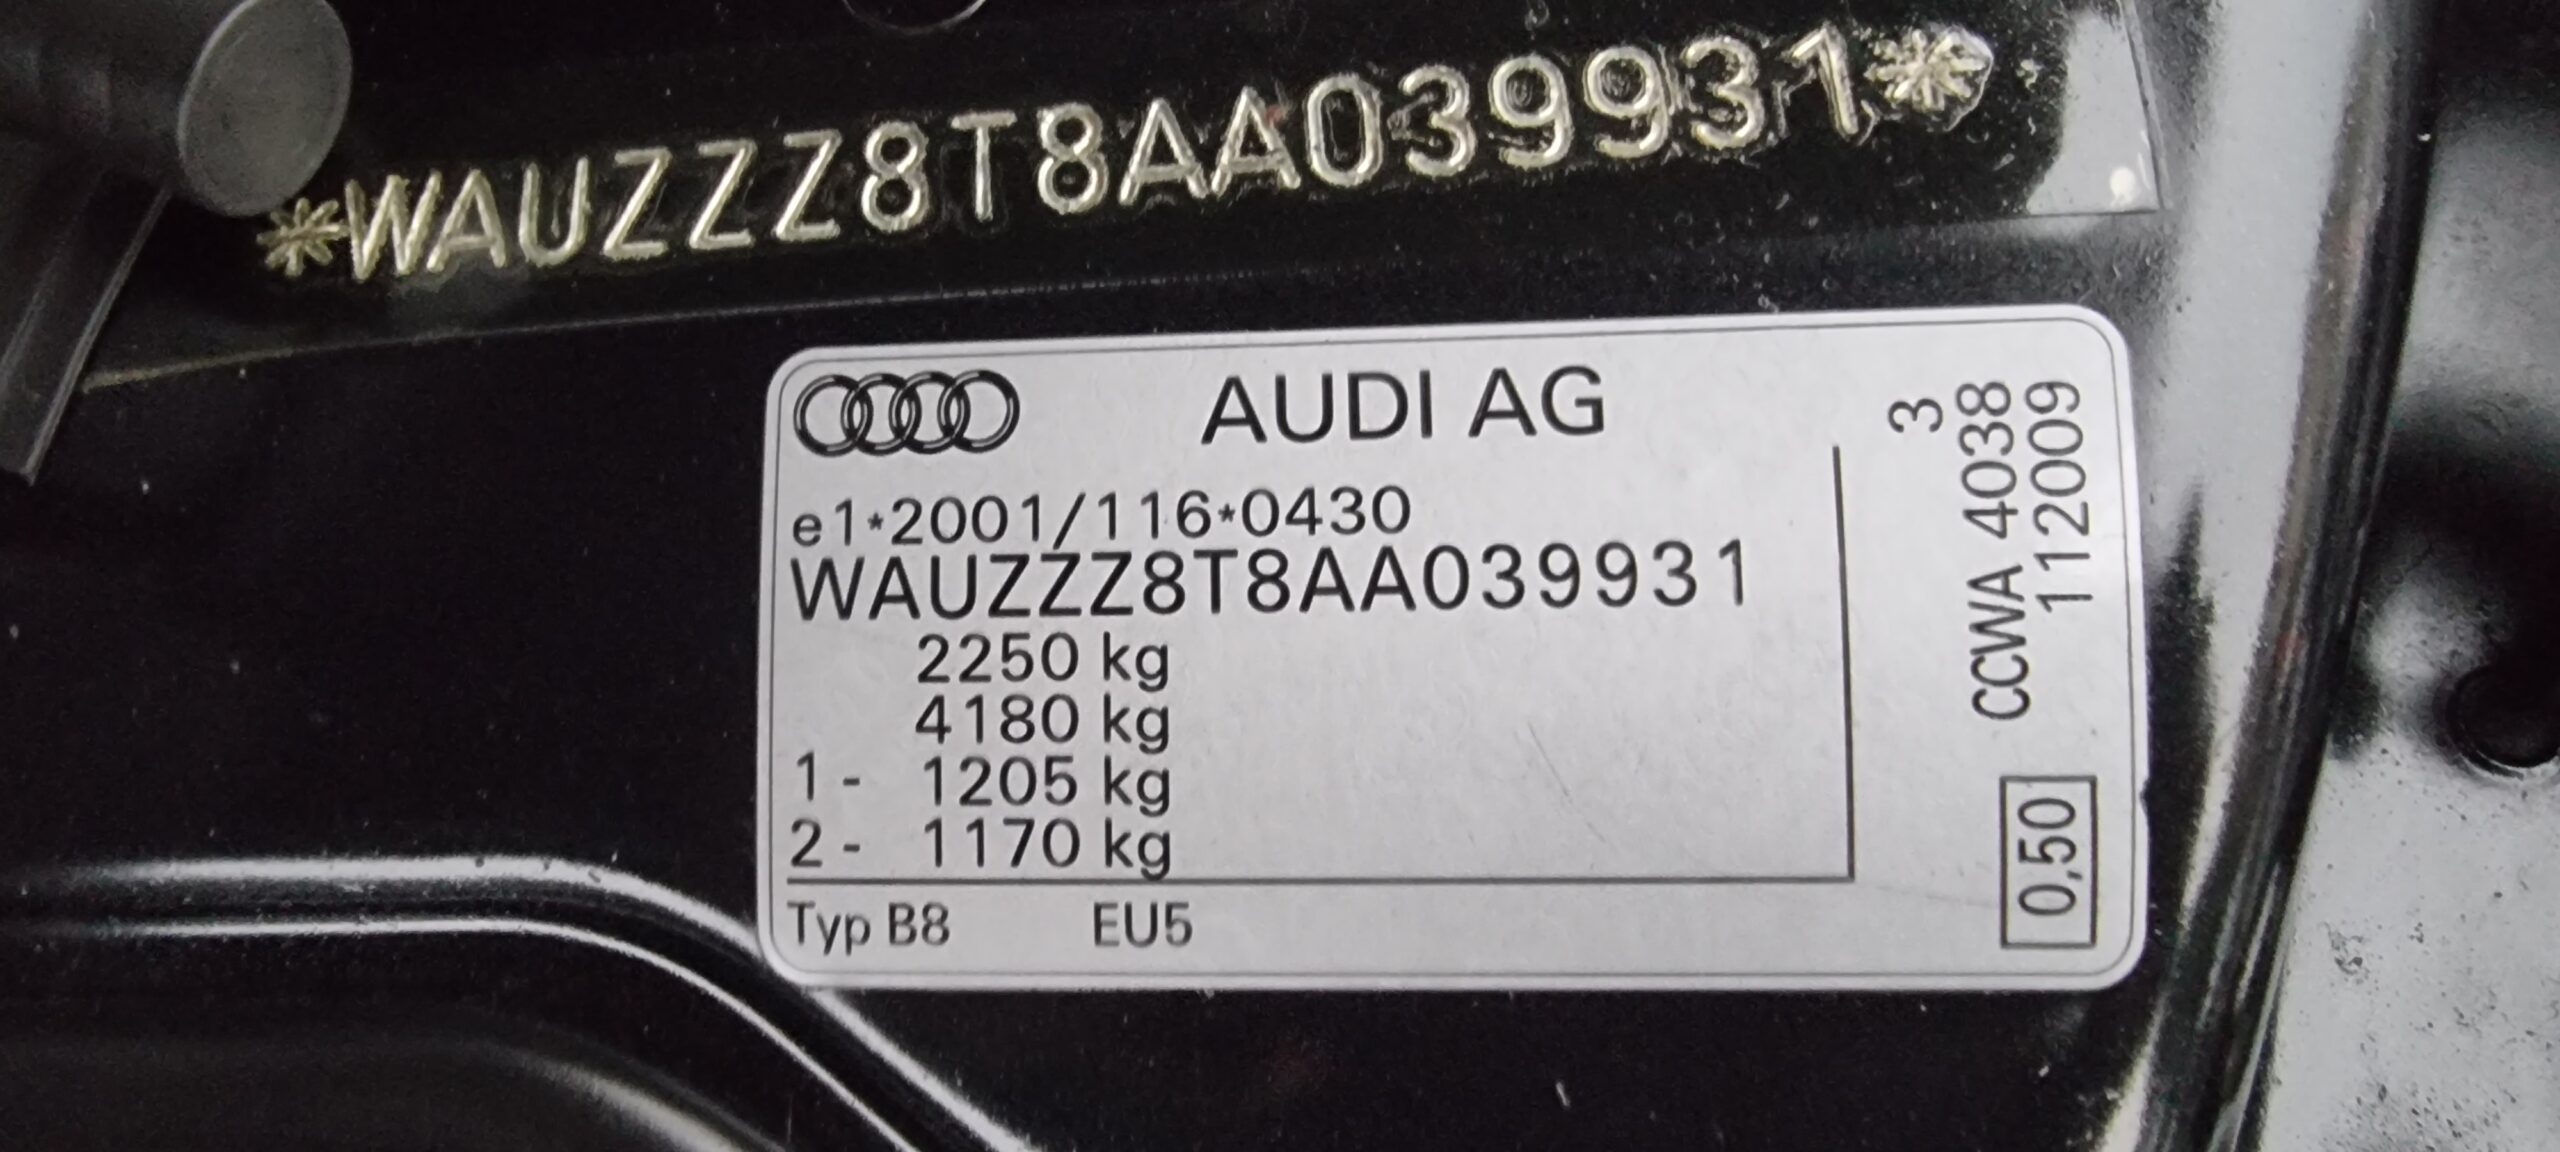 AUDI A5 S-LINE, 3.0 TDI, 239 CP, EURO 5, AN 2010